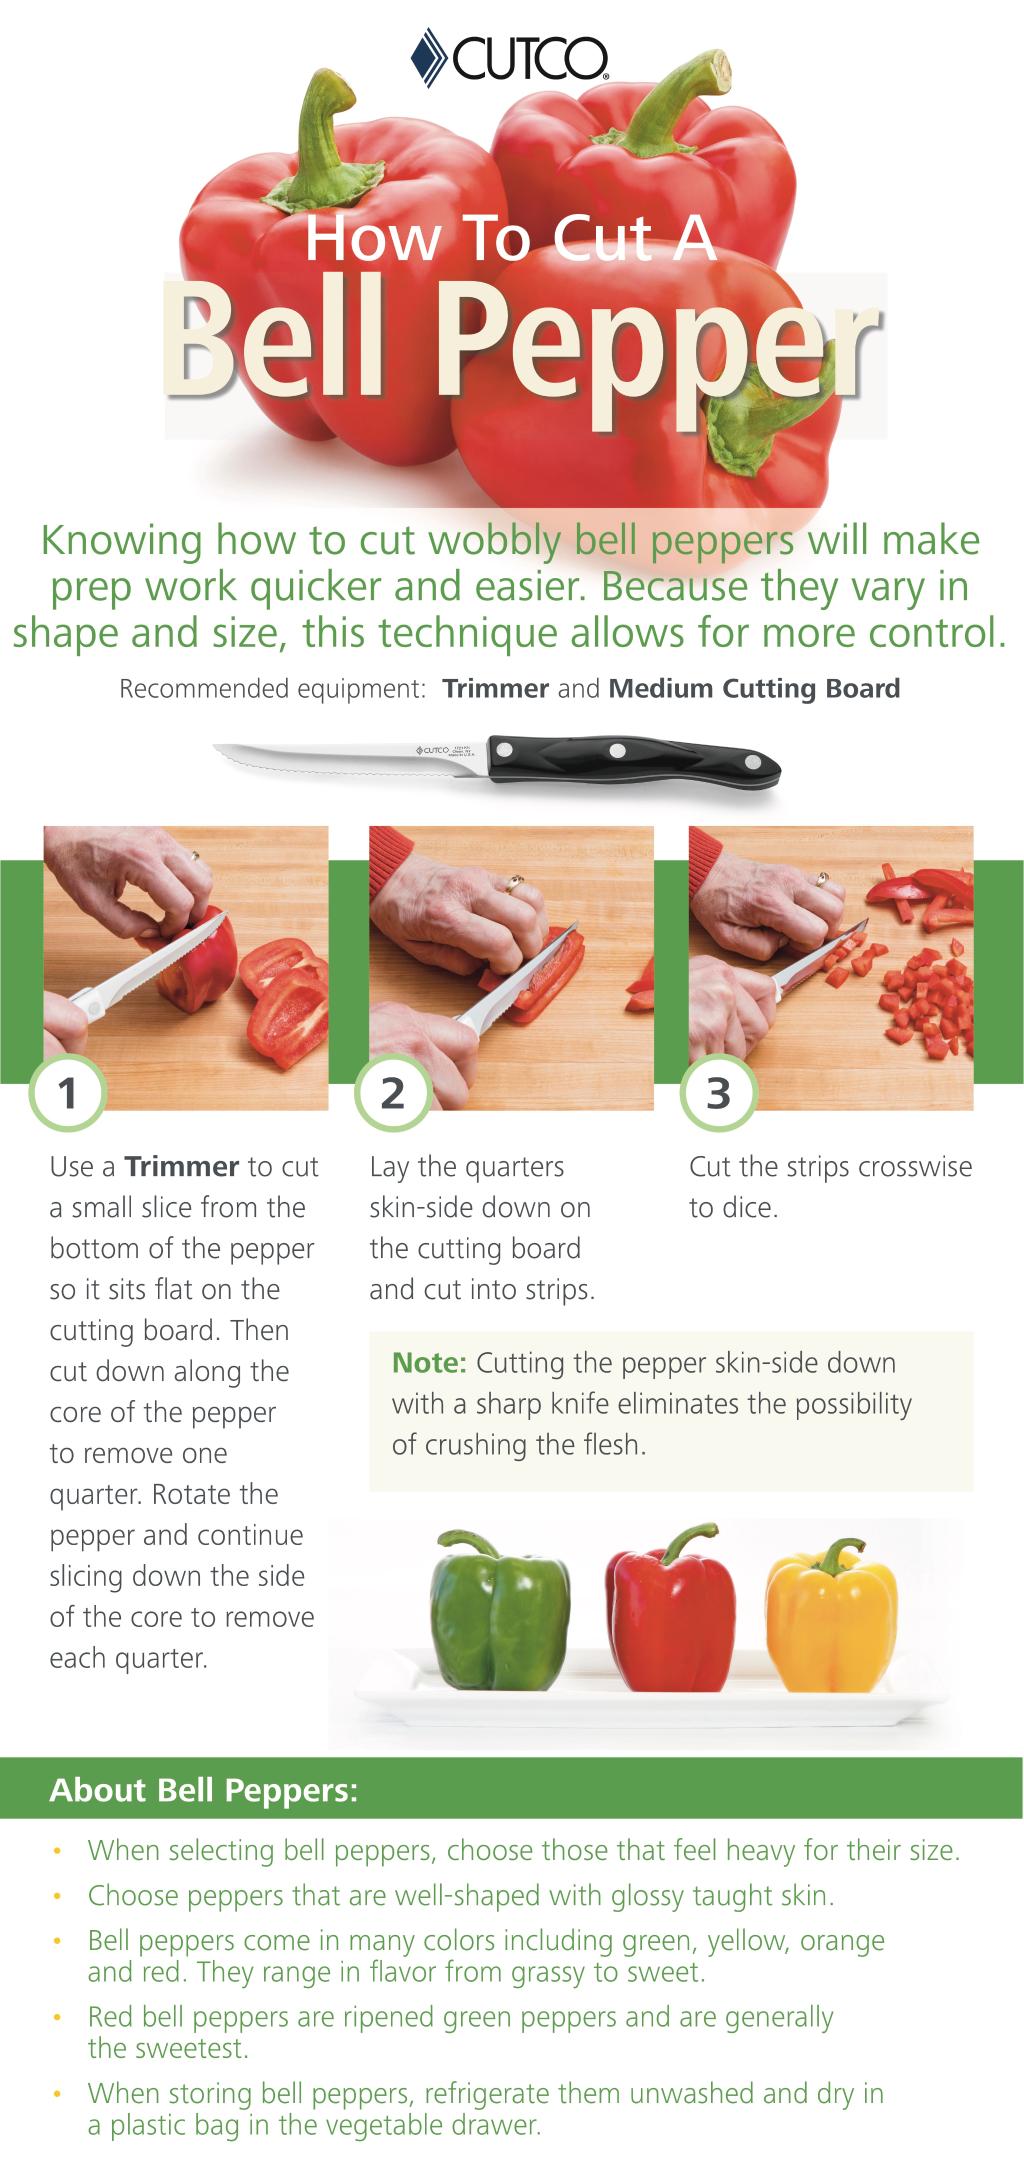 https://images.cutco.com/learn/2019/bell-pepper-infographic-l.jpg